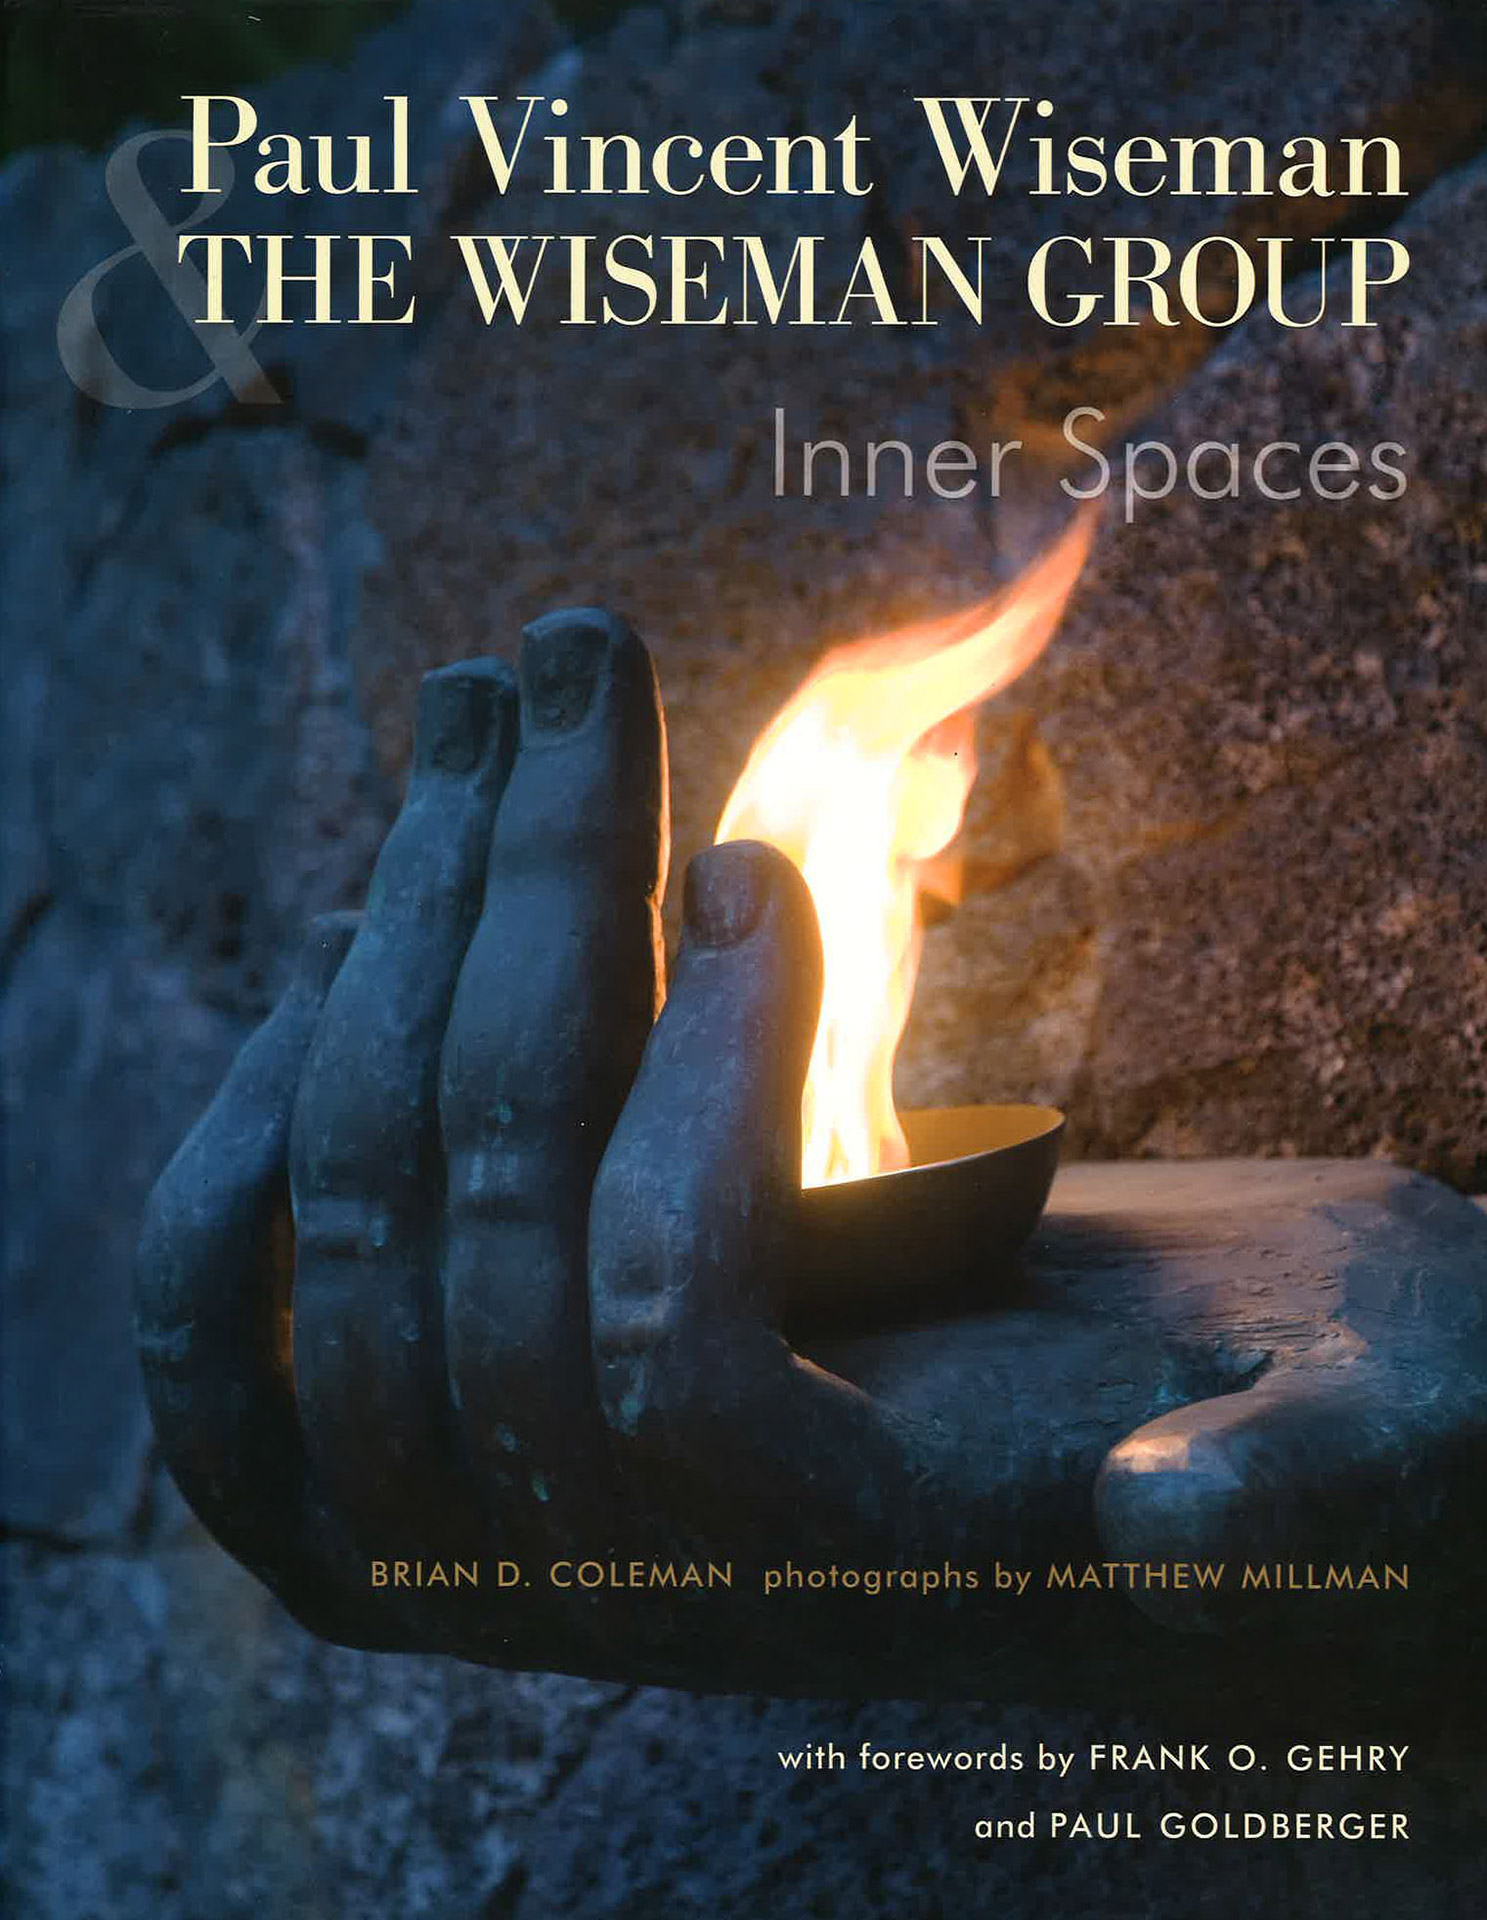 Inner-Space-Paul-Vincent-Wiseman